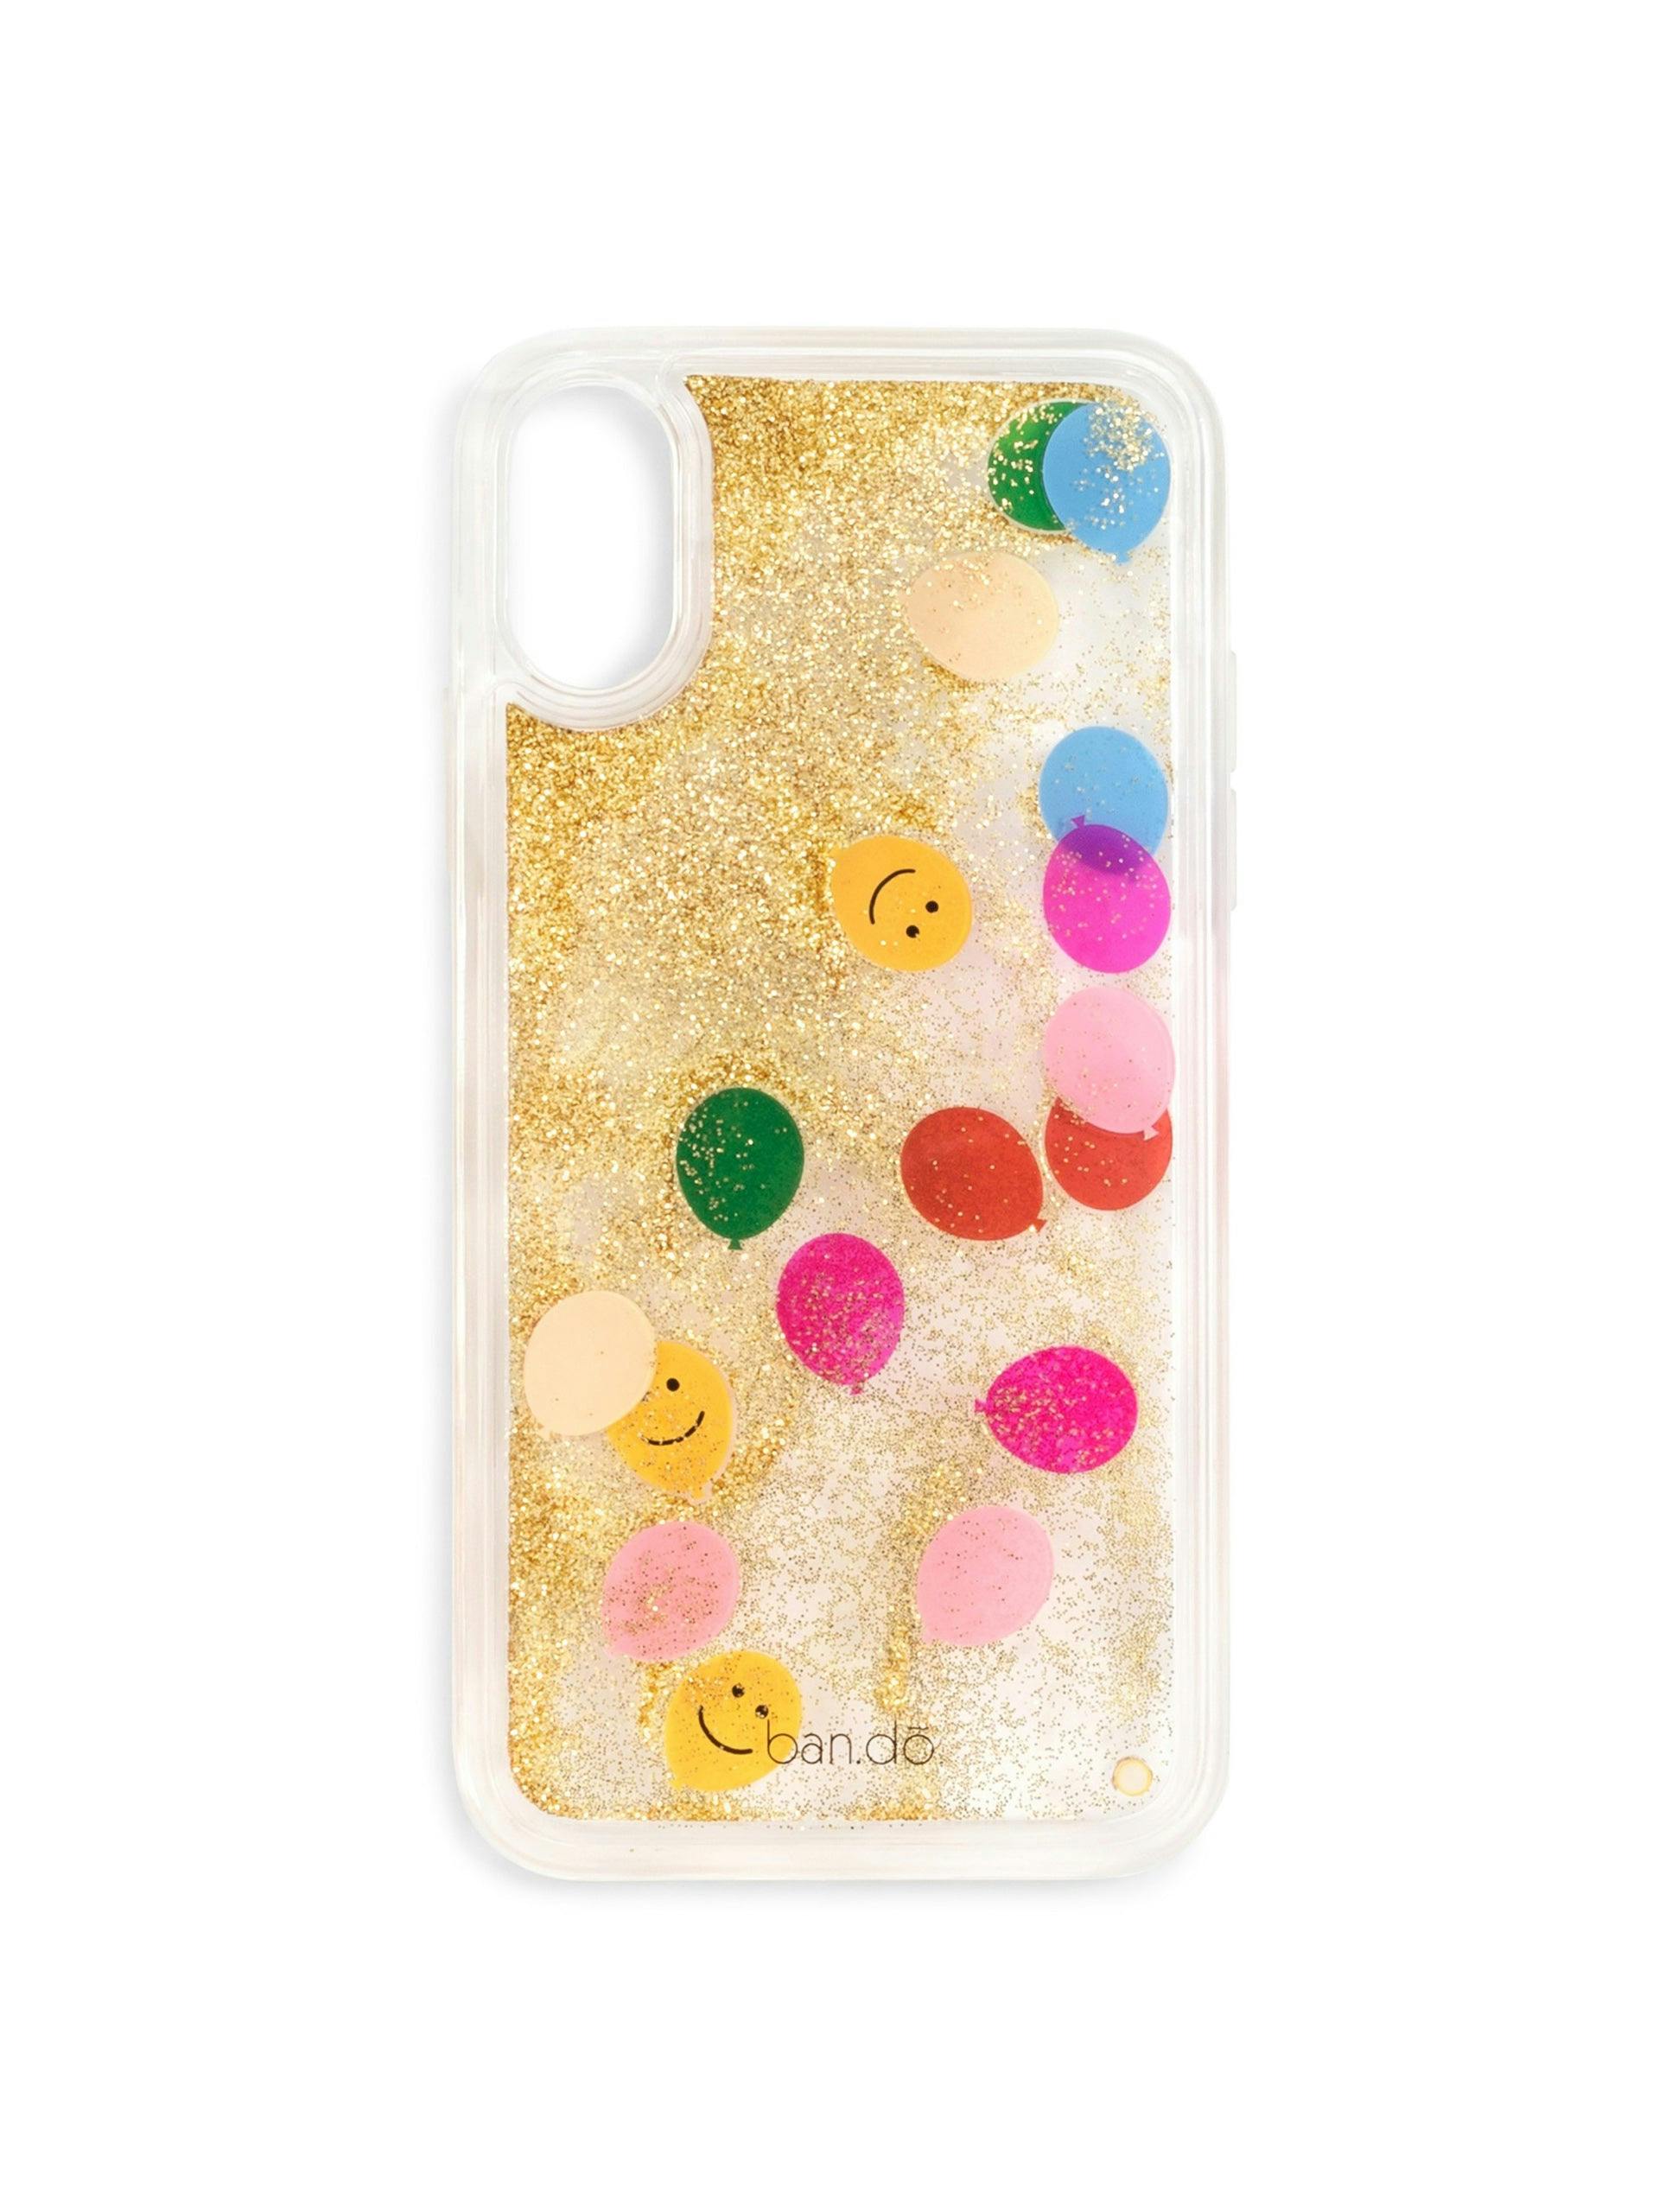 Glitter bomb iPhone X case